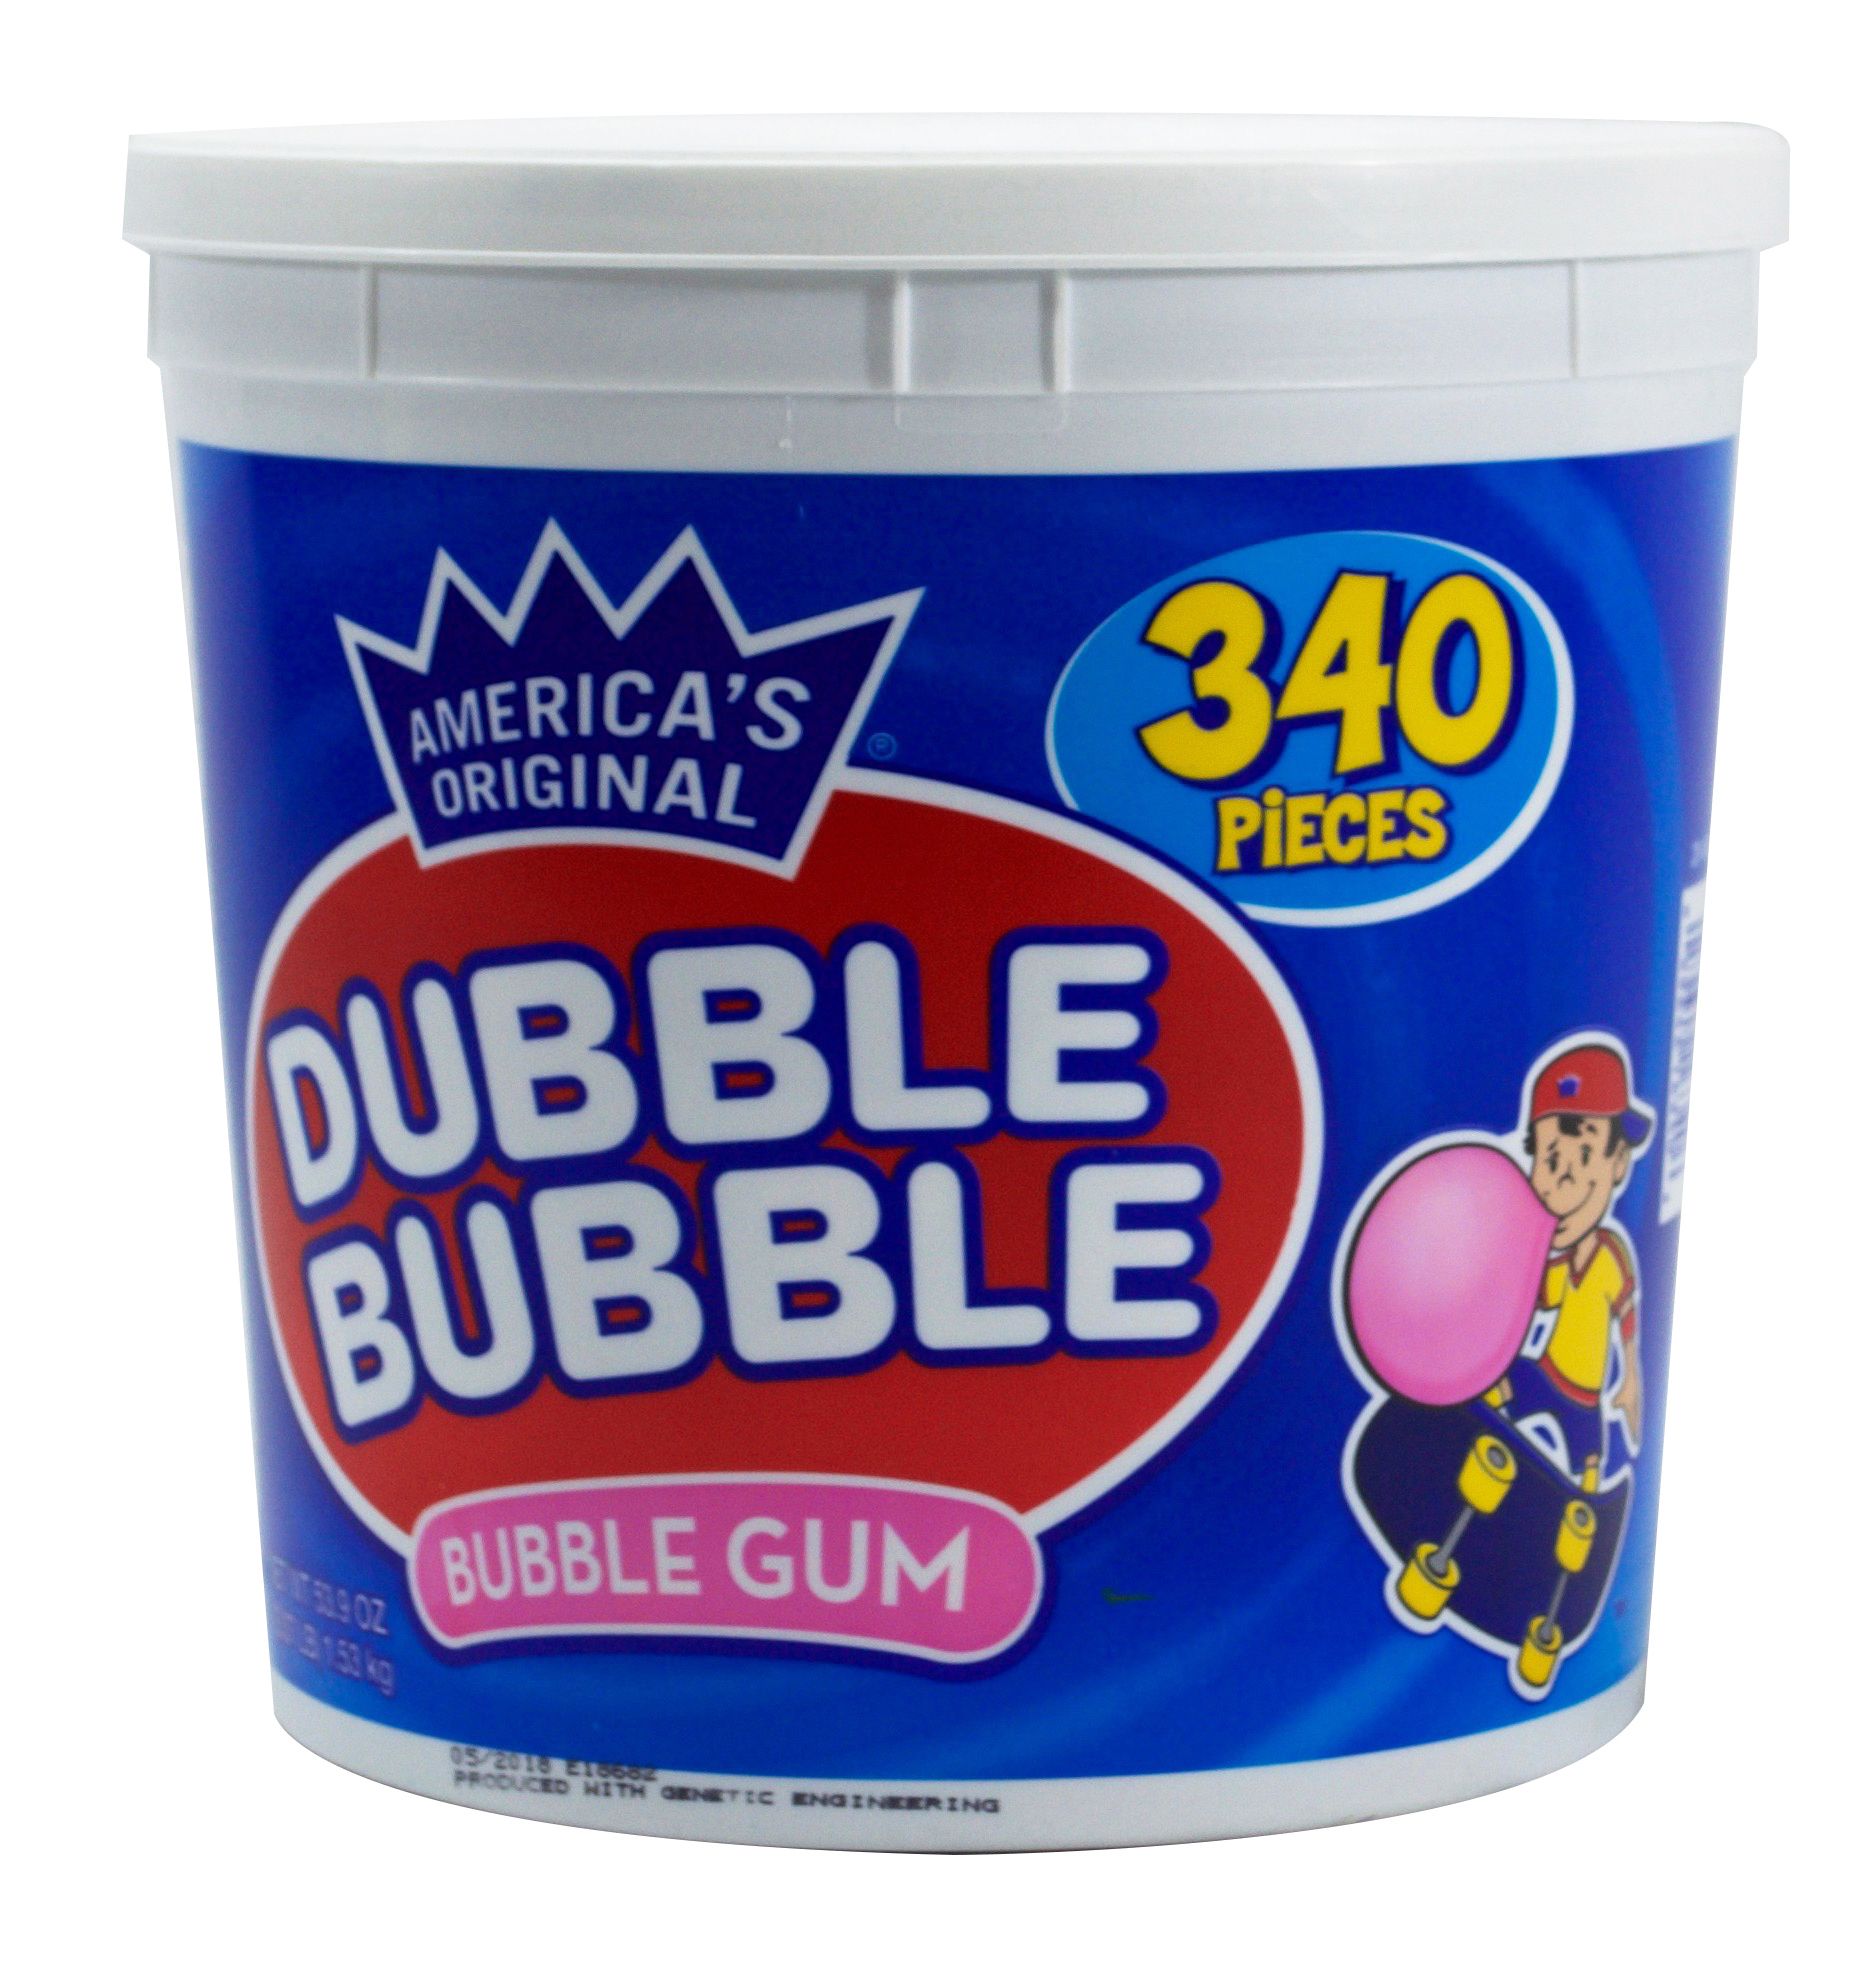 5 Gum Peppermint Cobalt Sugar-Free Chewing Gum, 10 pk./15 ct